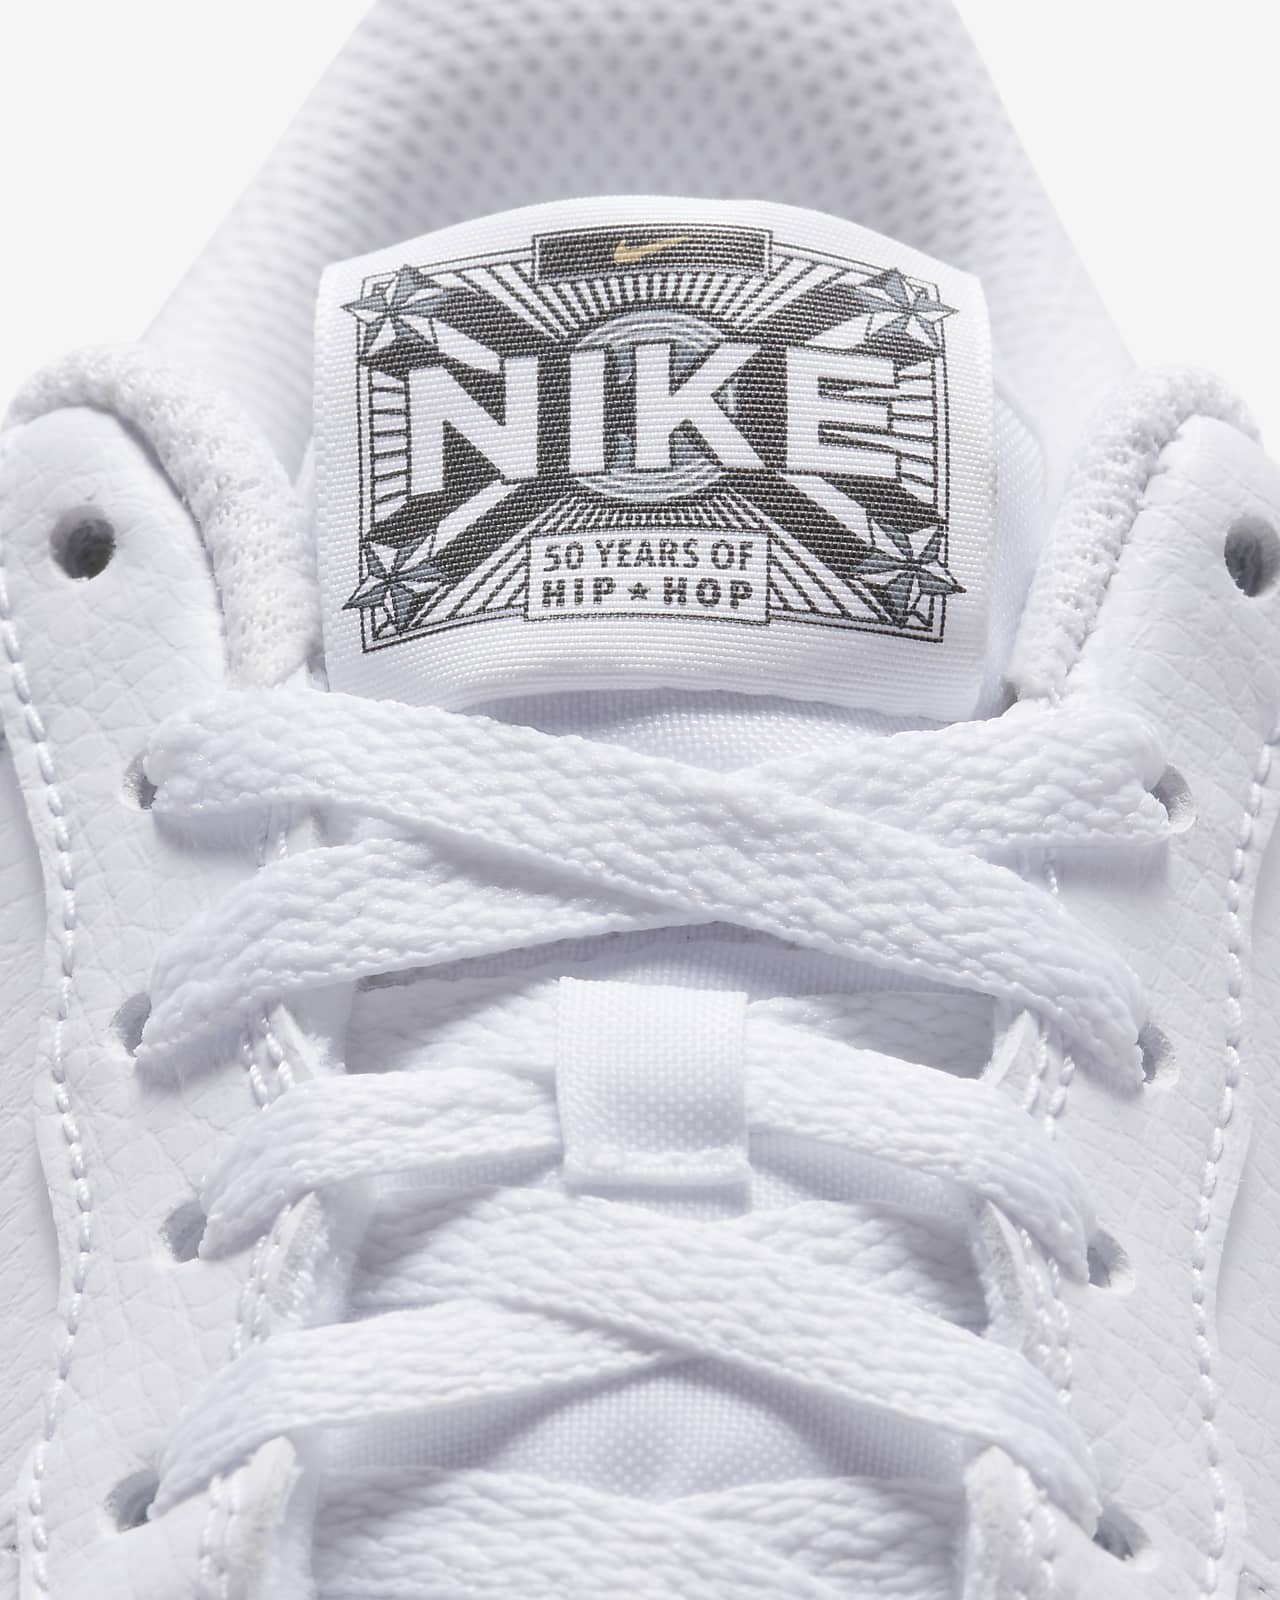 Kids Air Force 1 Shoes. Nike ID